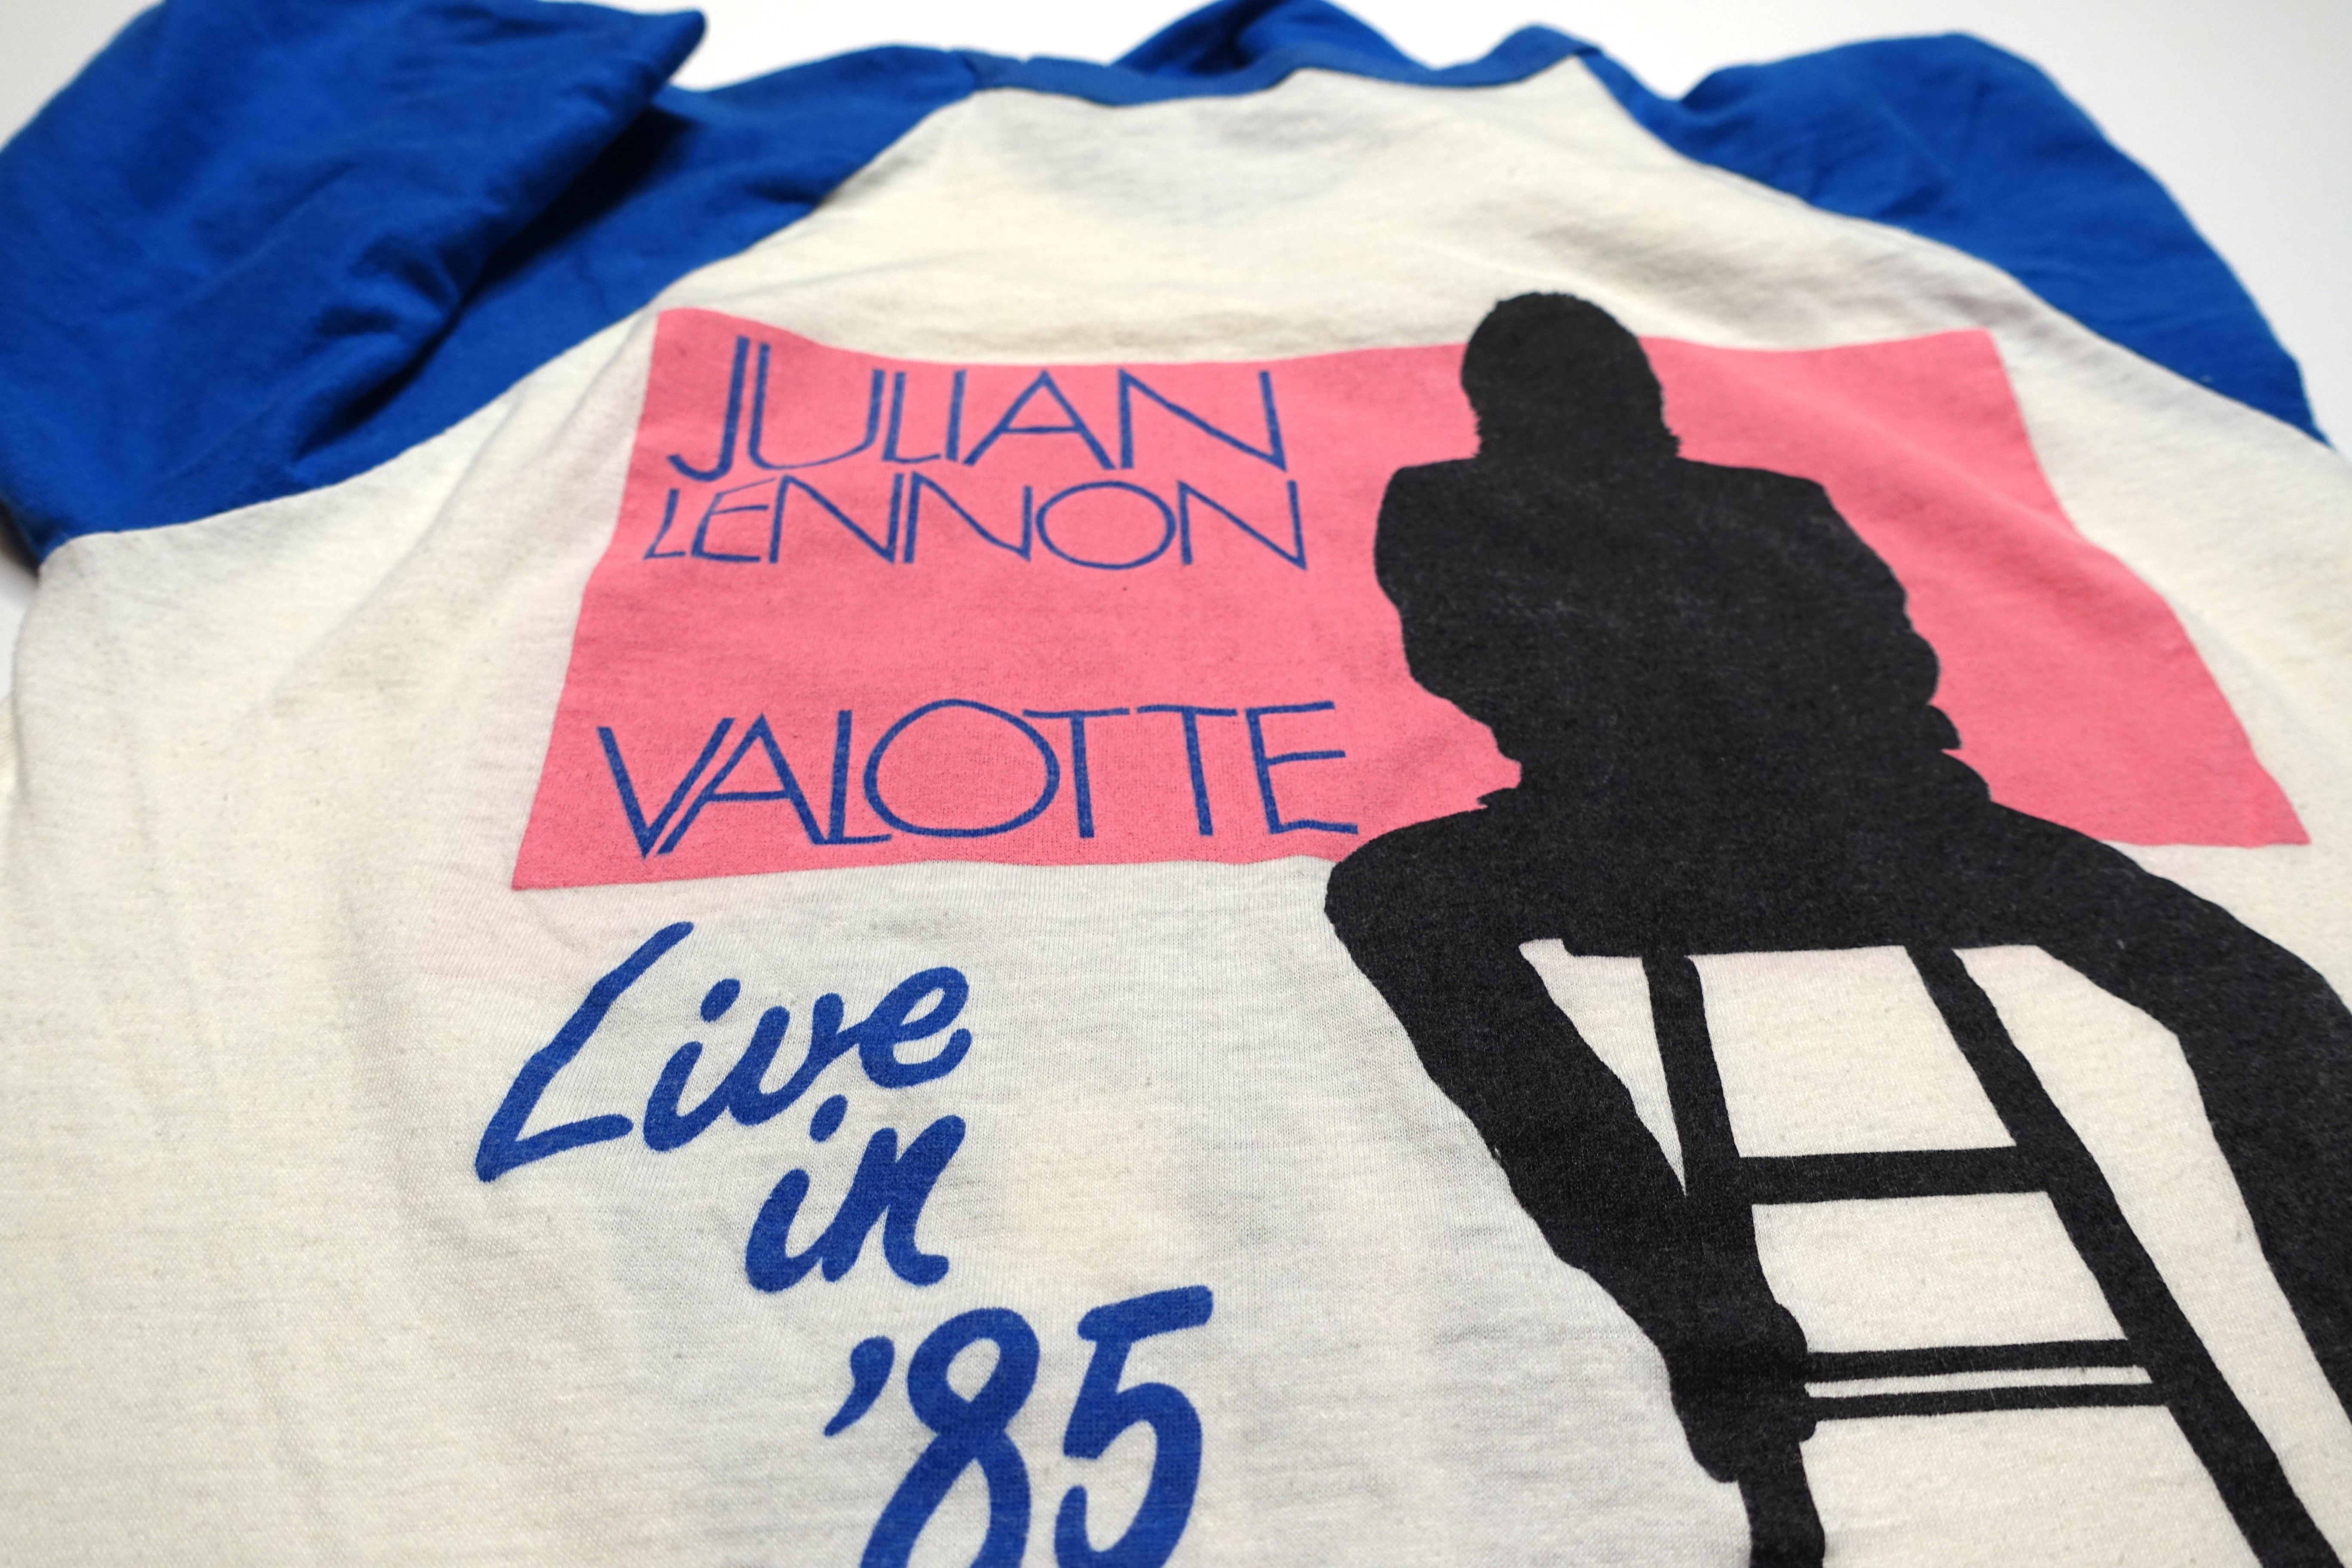 Julian Lennon ‎– Valotte Live in 1985 Tour Raglan Shirt Size Medium